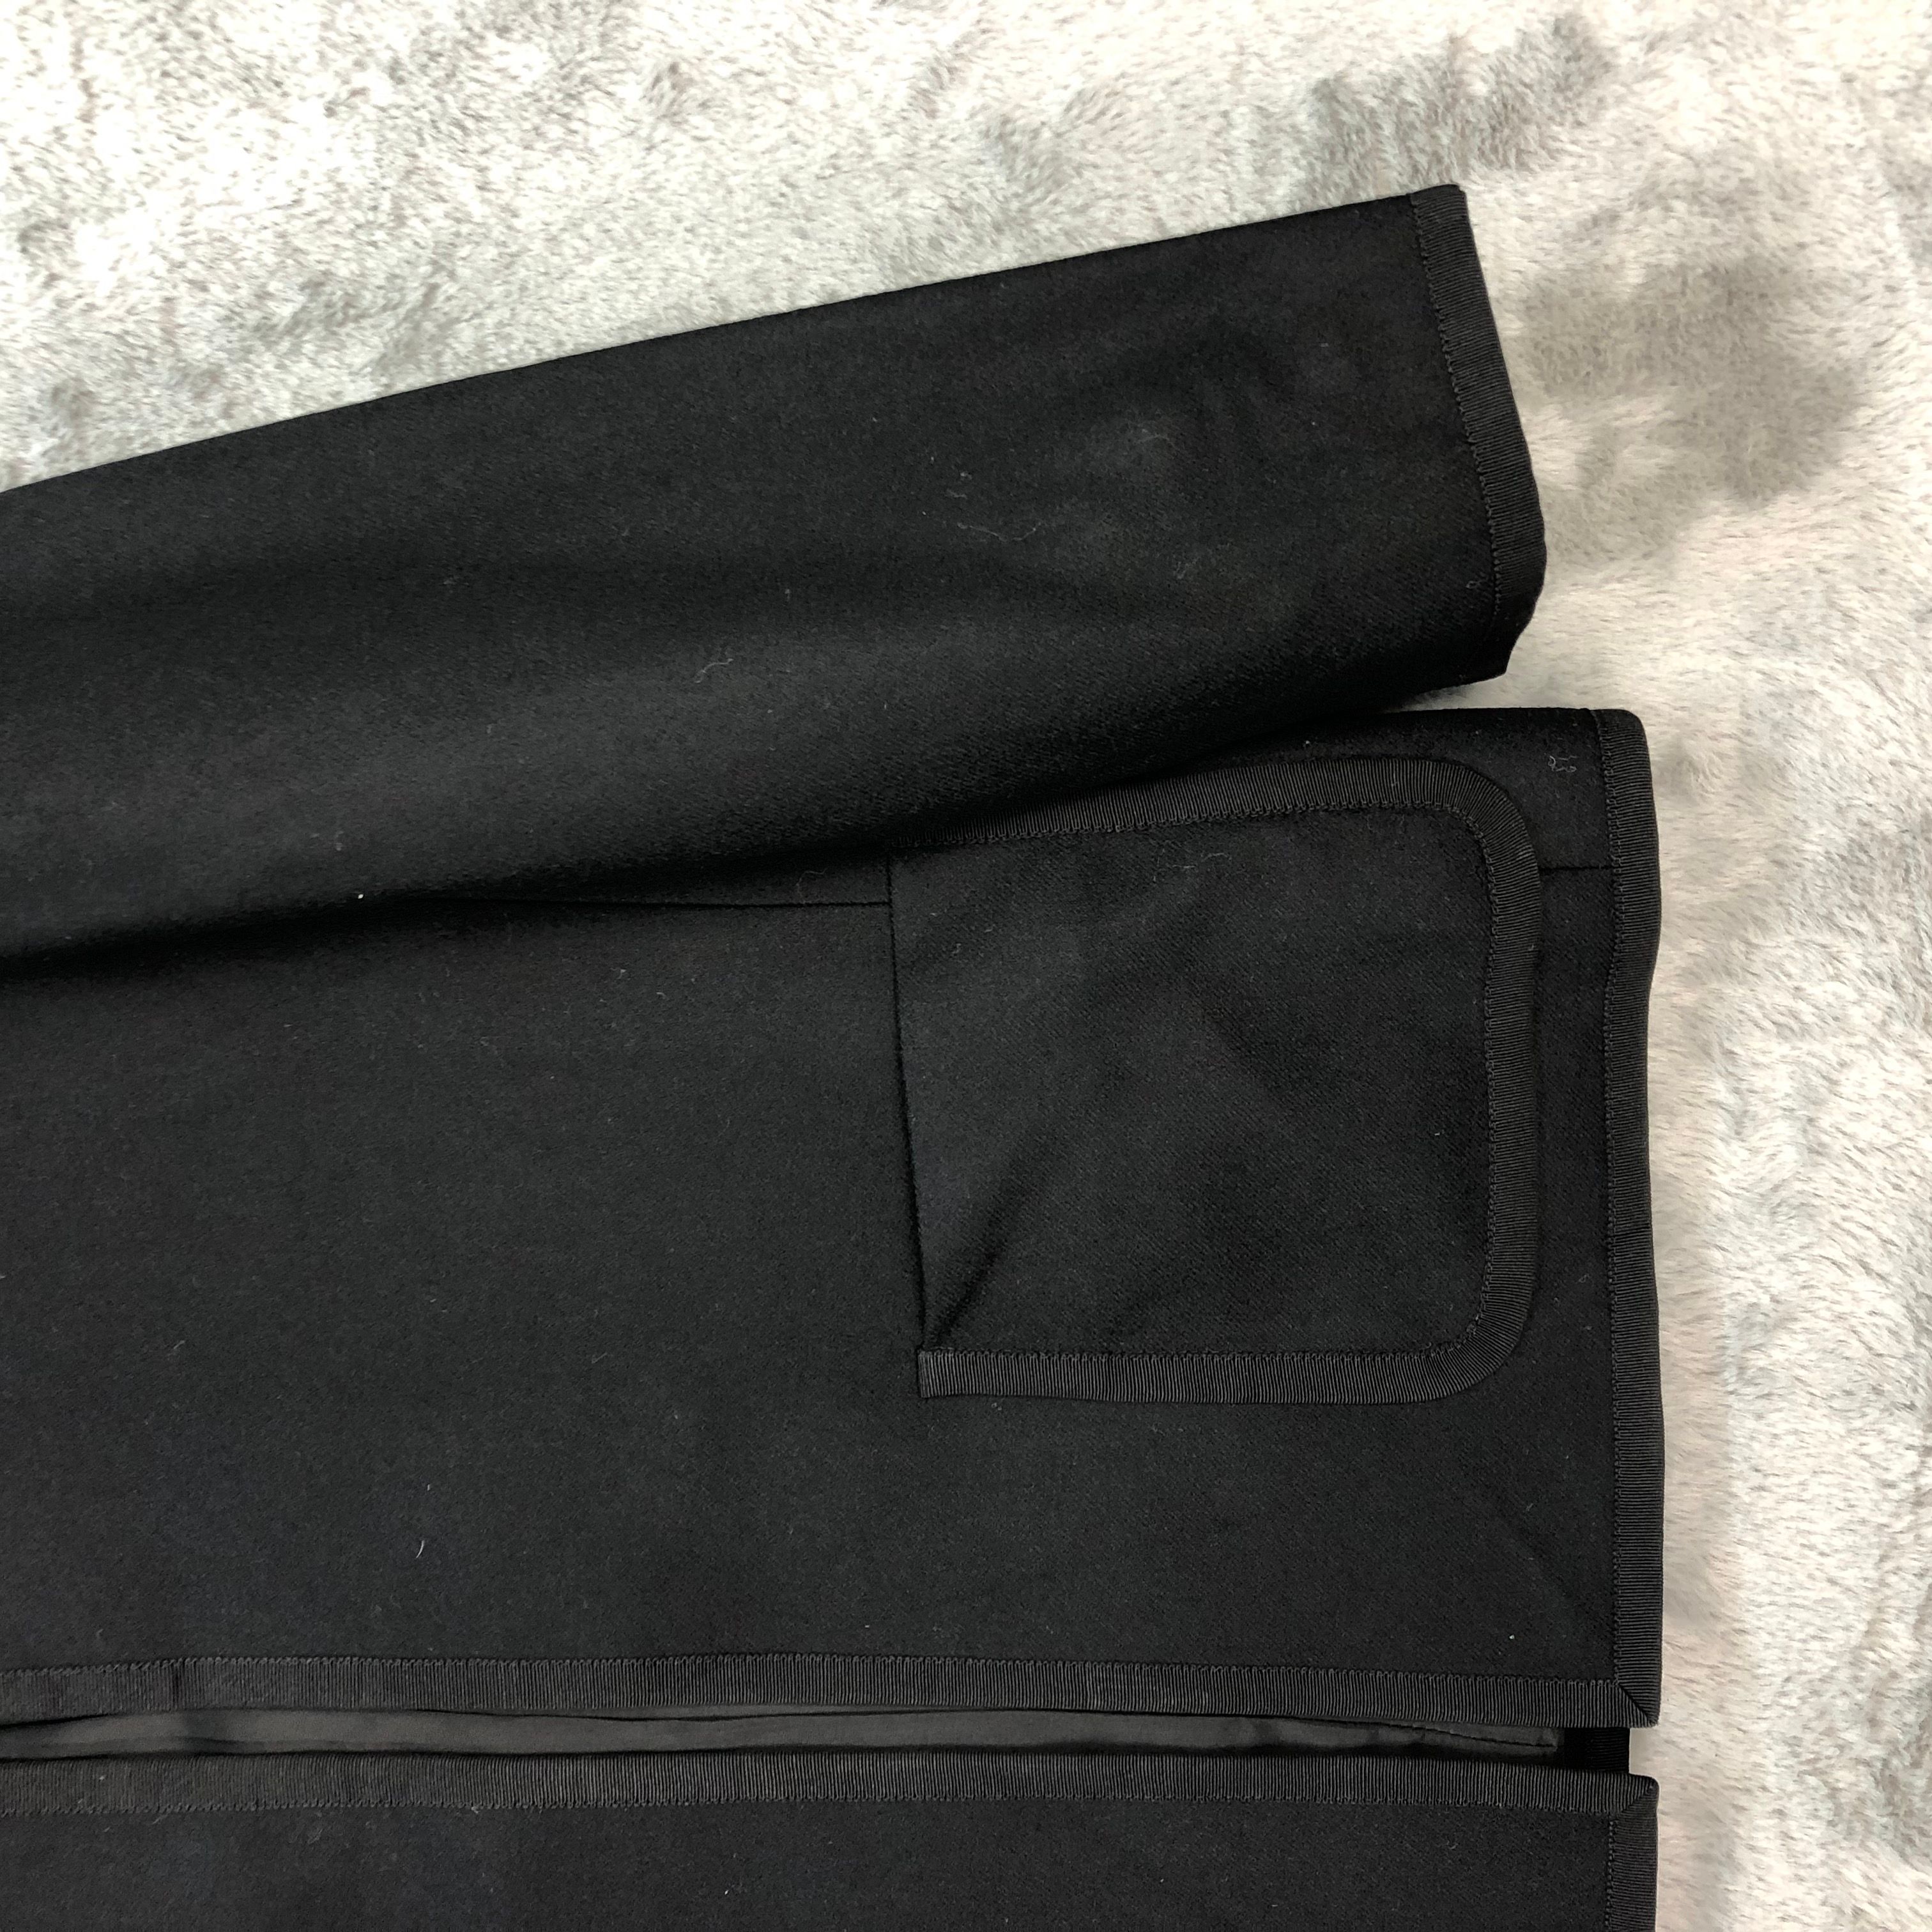 Givenchy Hi-Formal Buttonless Jacket / Cardigan #1037-42 - 5